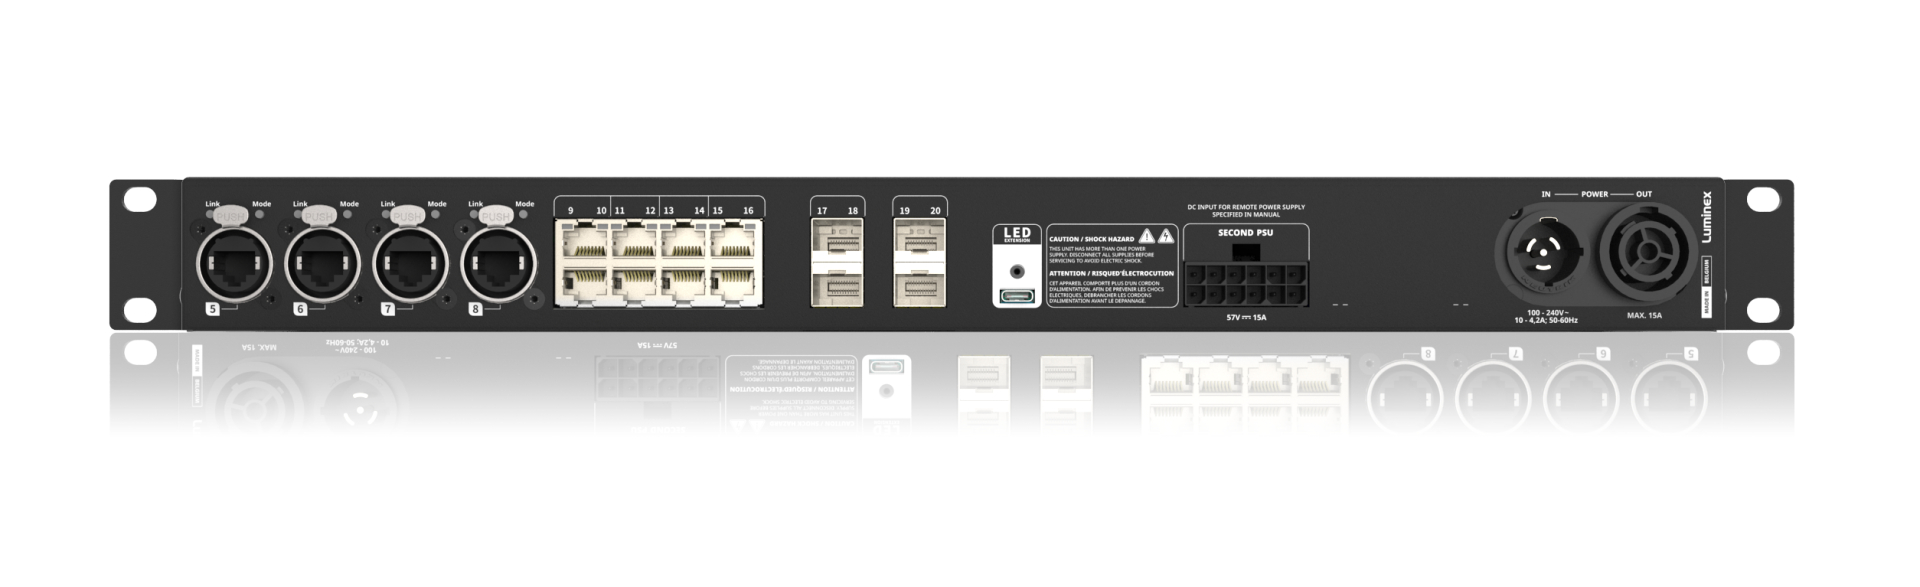 Luminex Gigacore 20t ethernet switch - rear